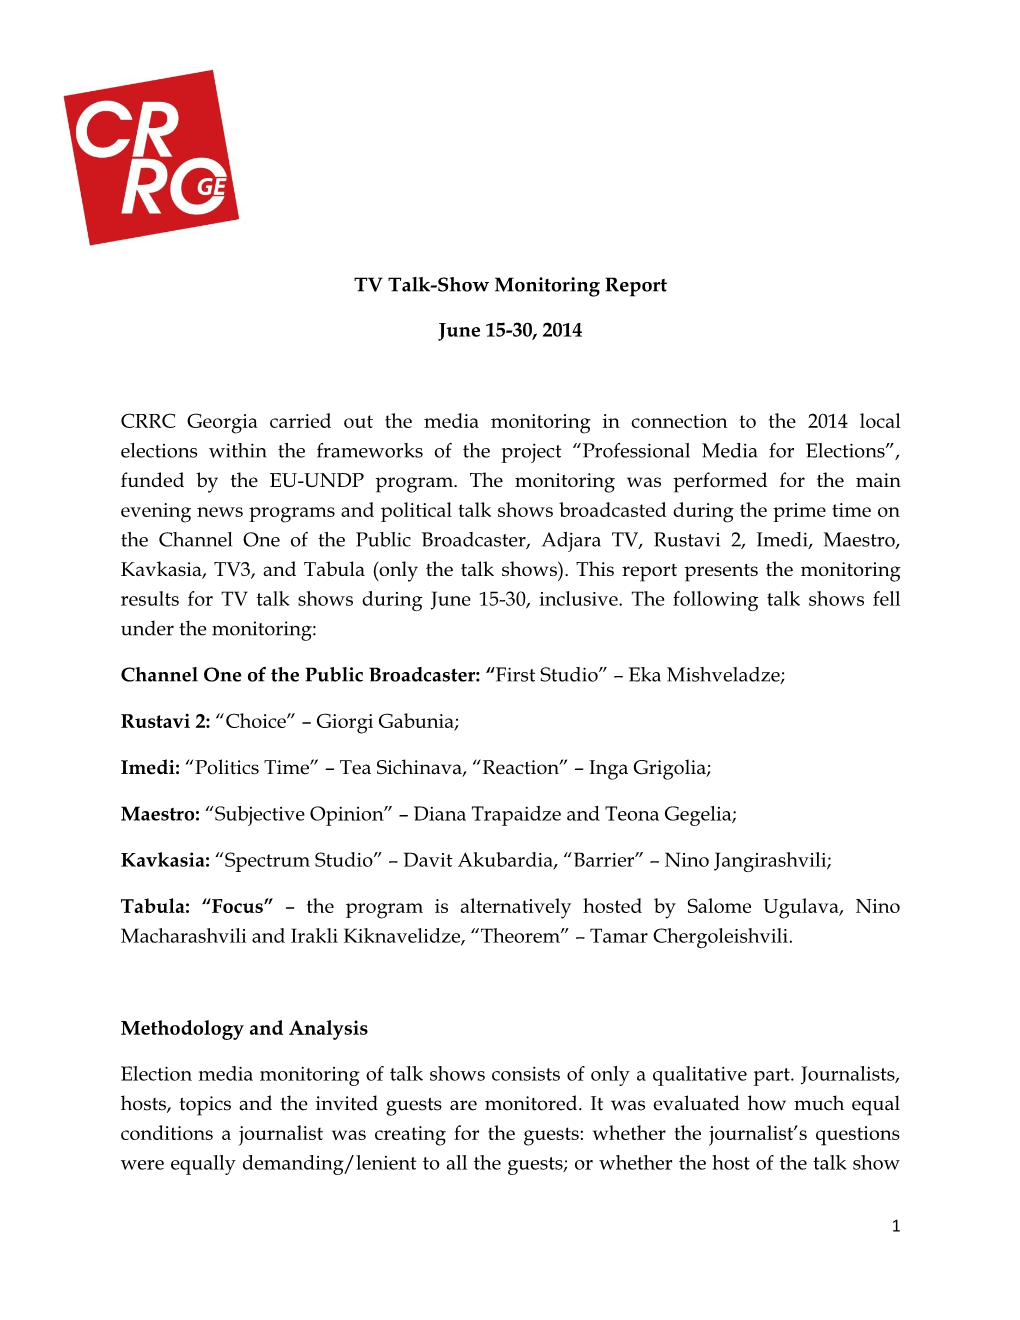 TV Talk-Show Monitoring Report June 15-30, 2014 CRRC Georgia